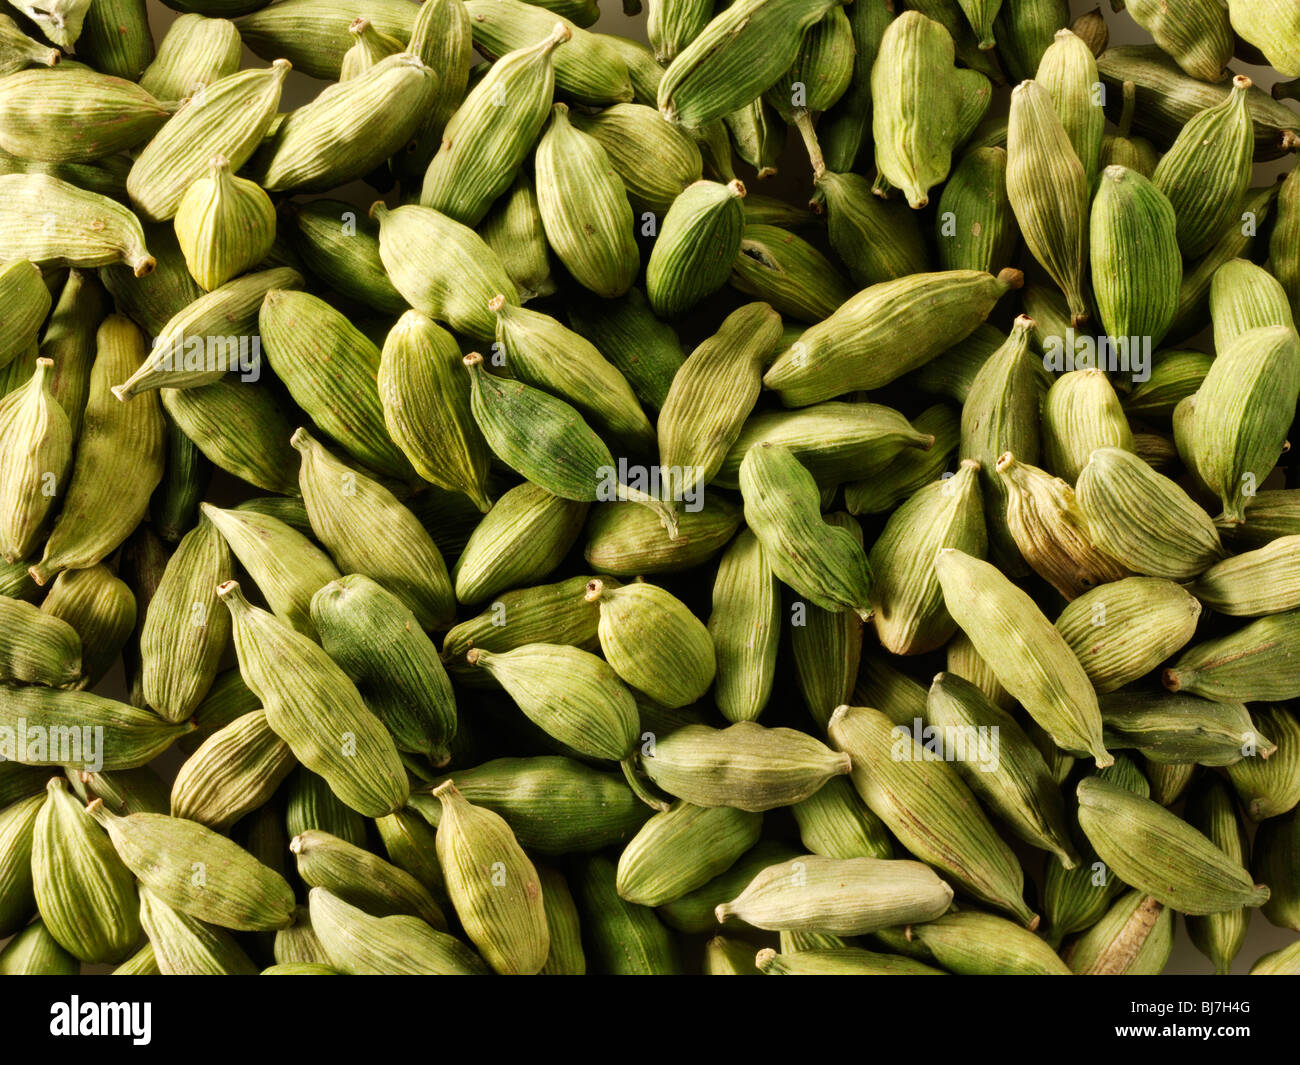 Whole Green Elaichi Cardomoms pods , close up full frame Stock Photo